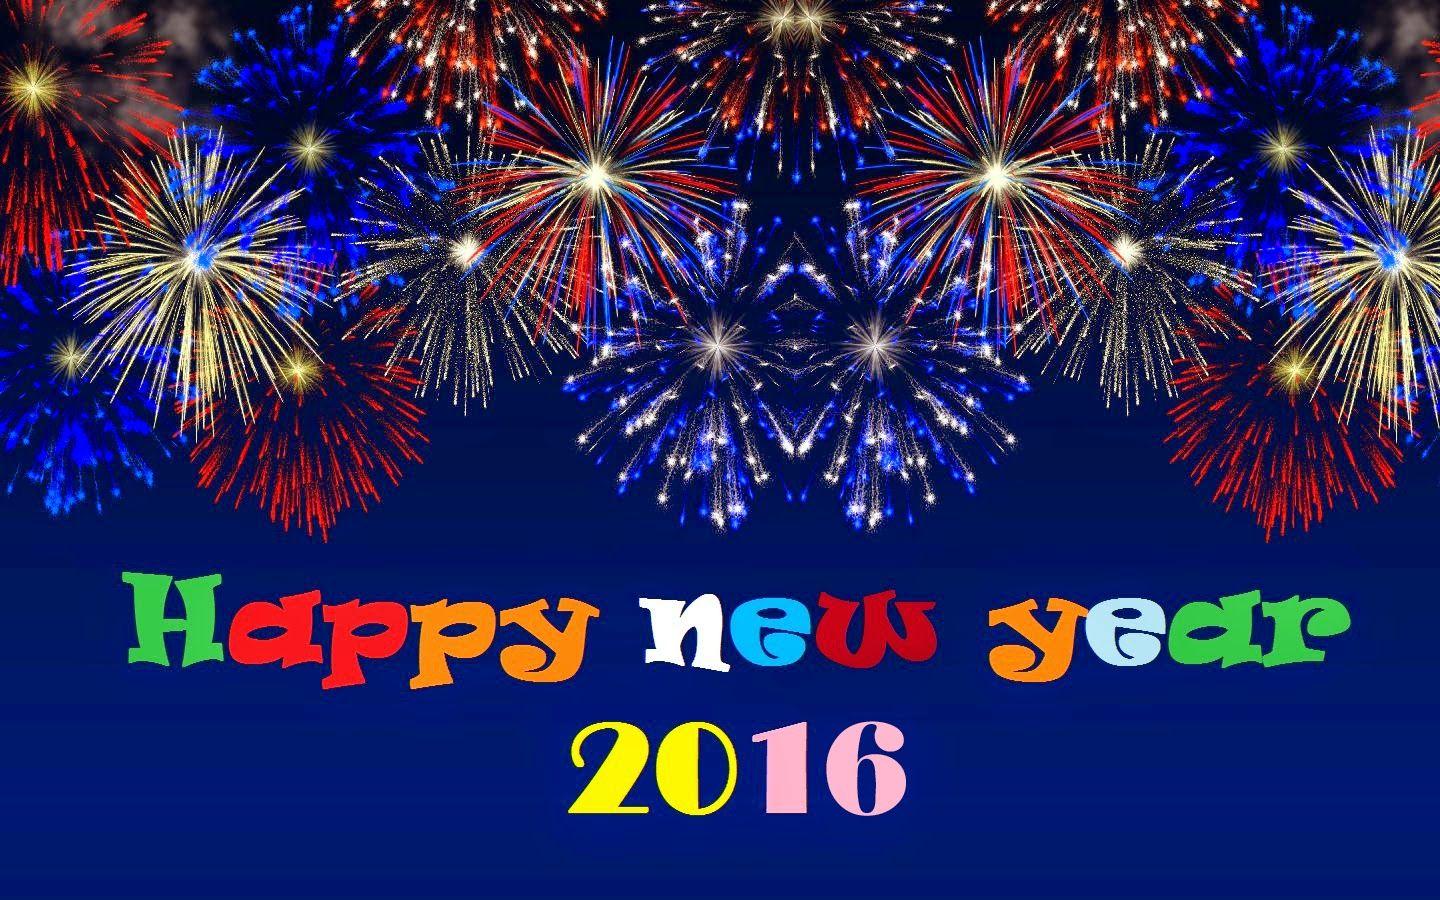 Happy New Year Wallpaper 2016 In HD Free. Wallpaper Happy New Years